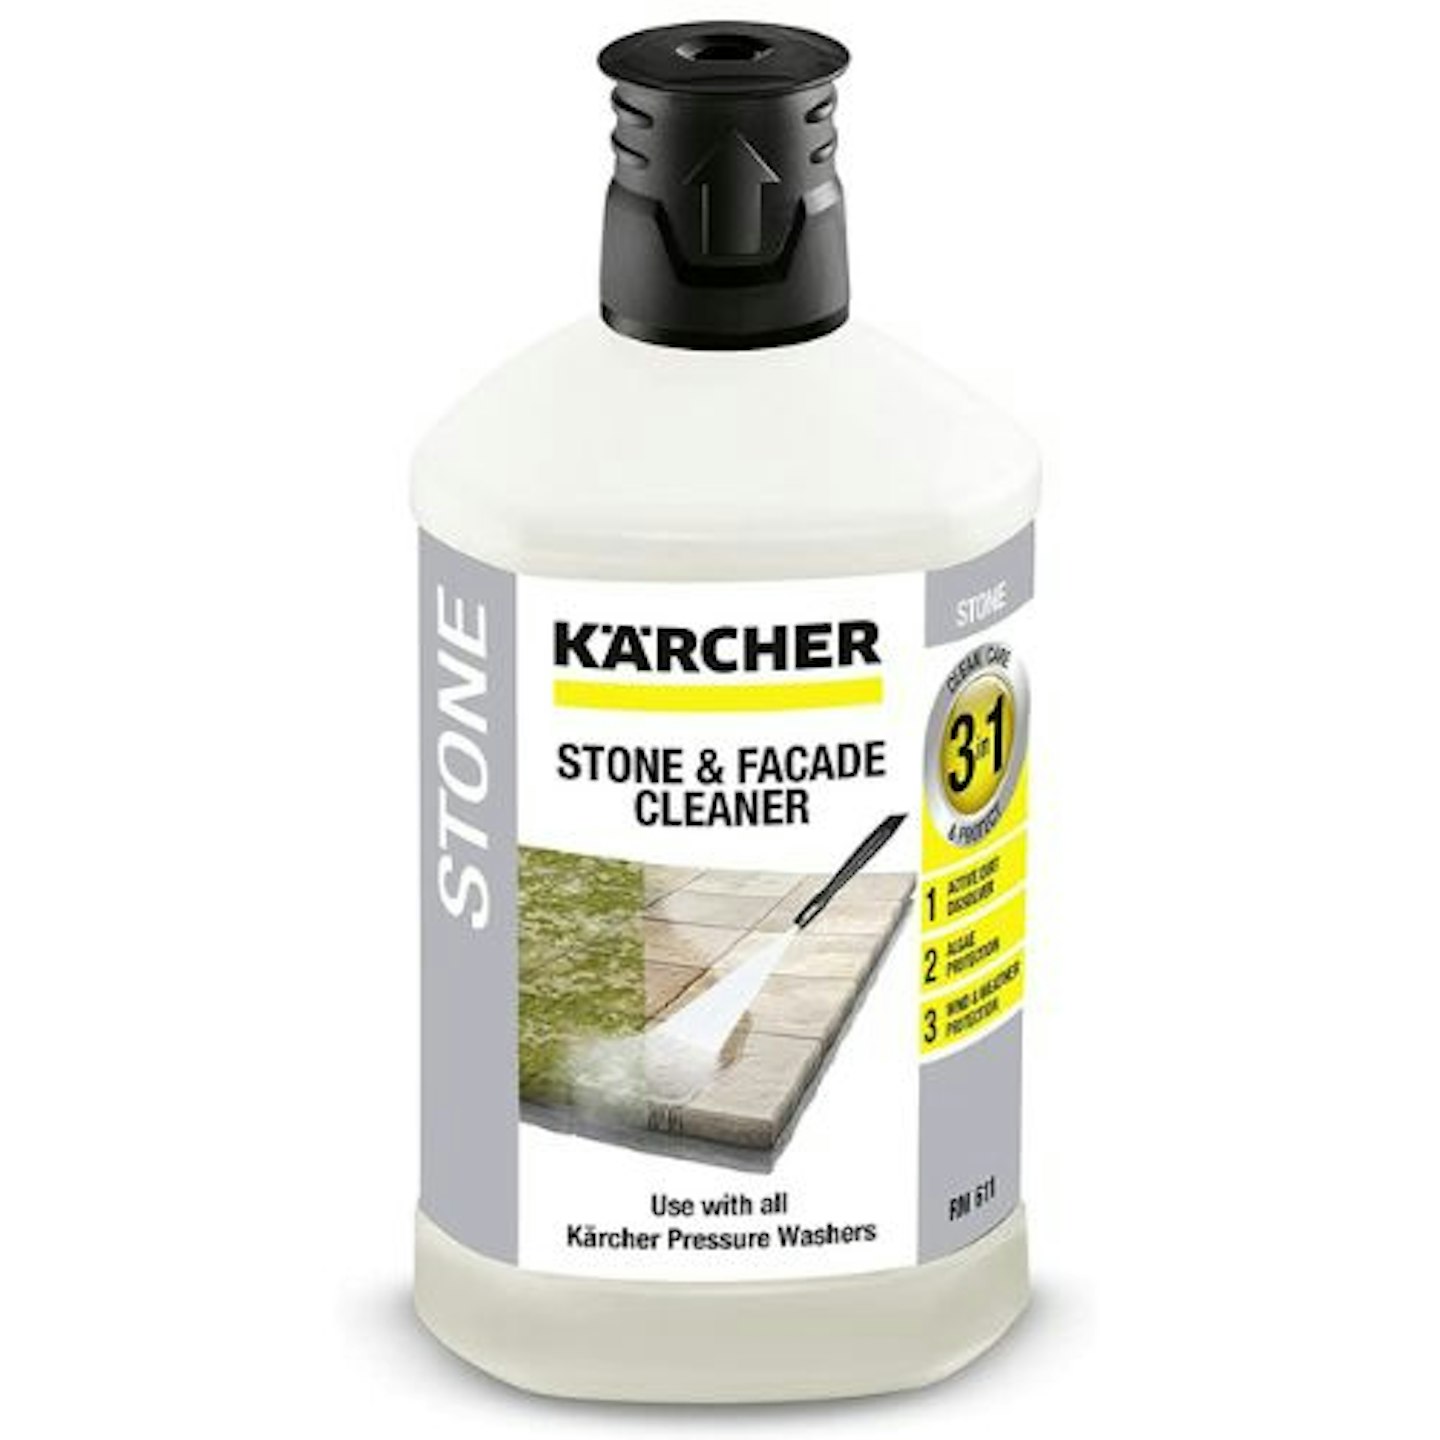 Kärcher Stone and Façade Cleaner